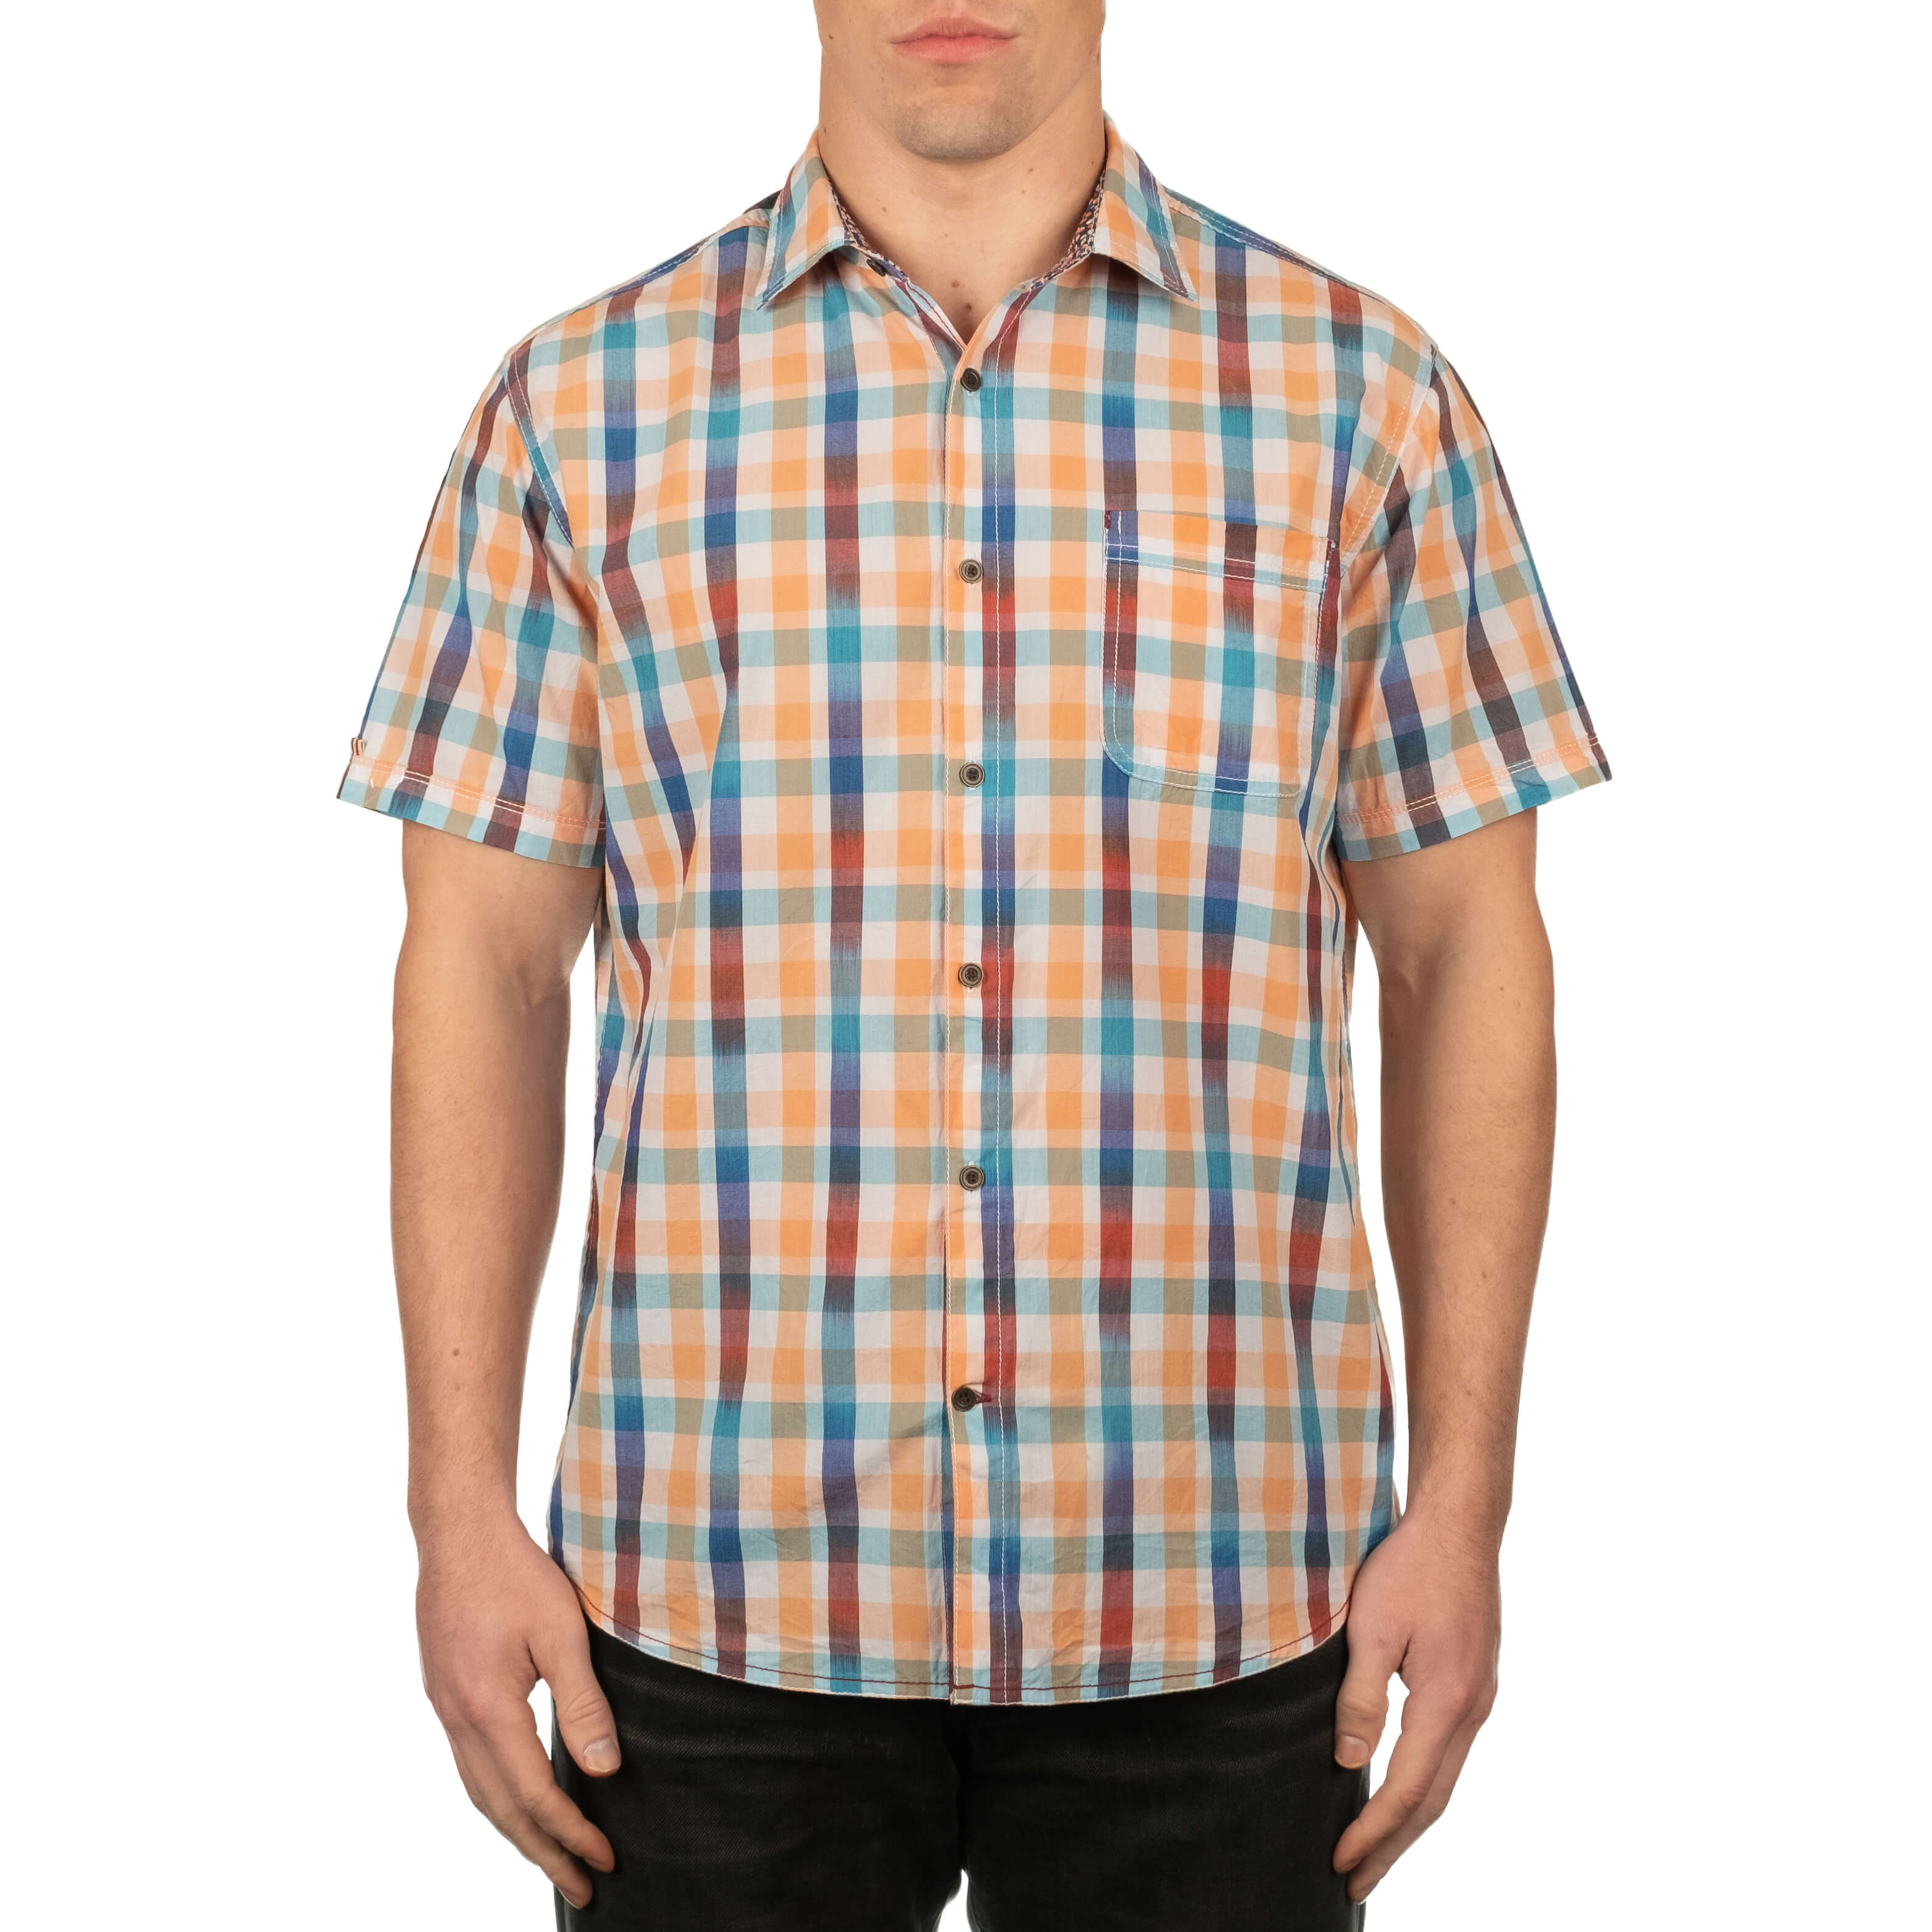 Columbia Men's Short Sleeve Peach Check Shirt - QUIETI